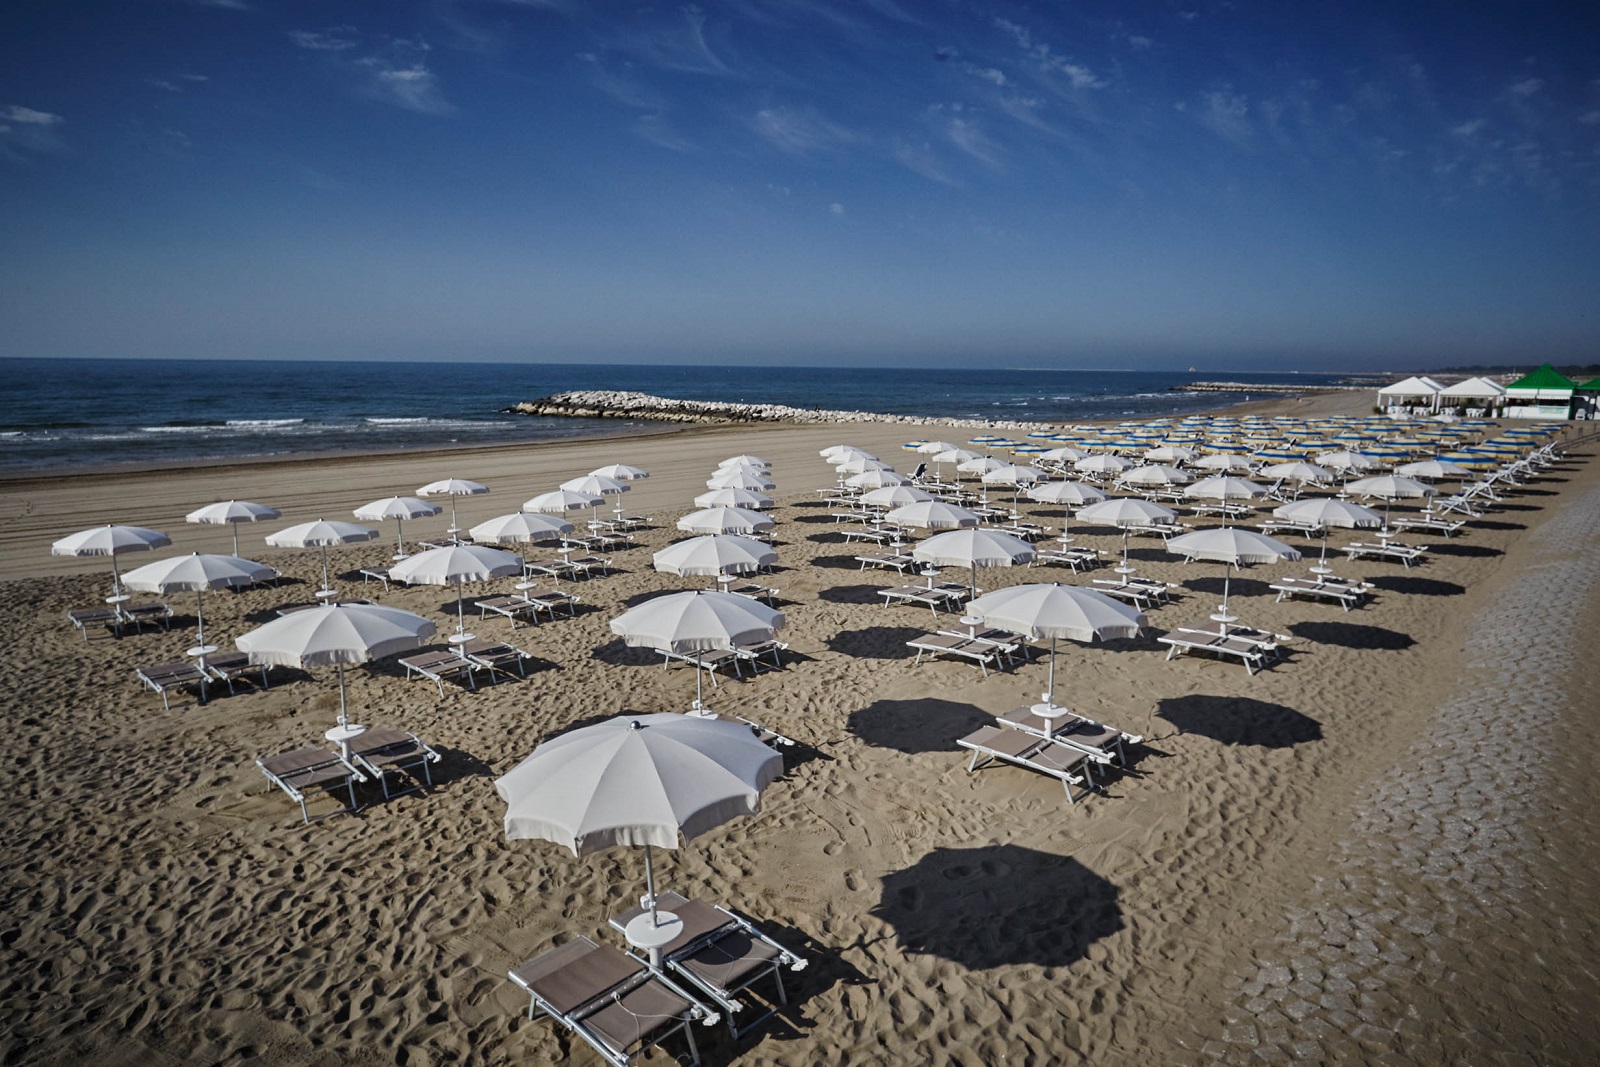 Foto av Spiaggia di Cavallino Treporti med hög nivå av renlighet